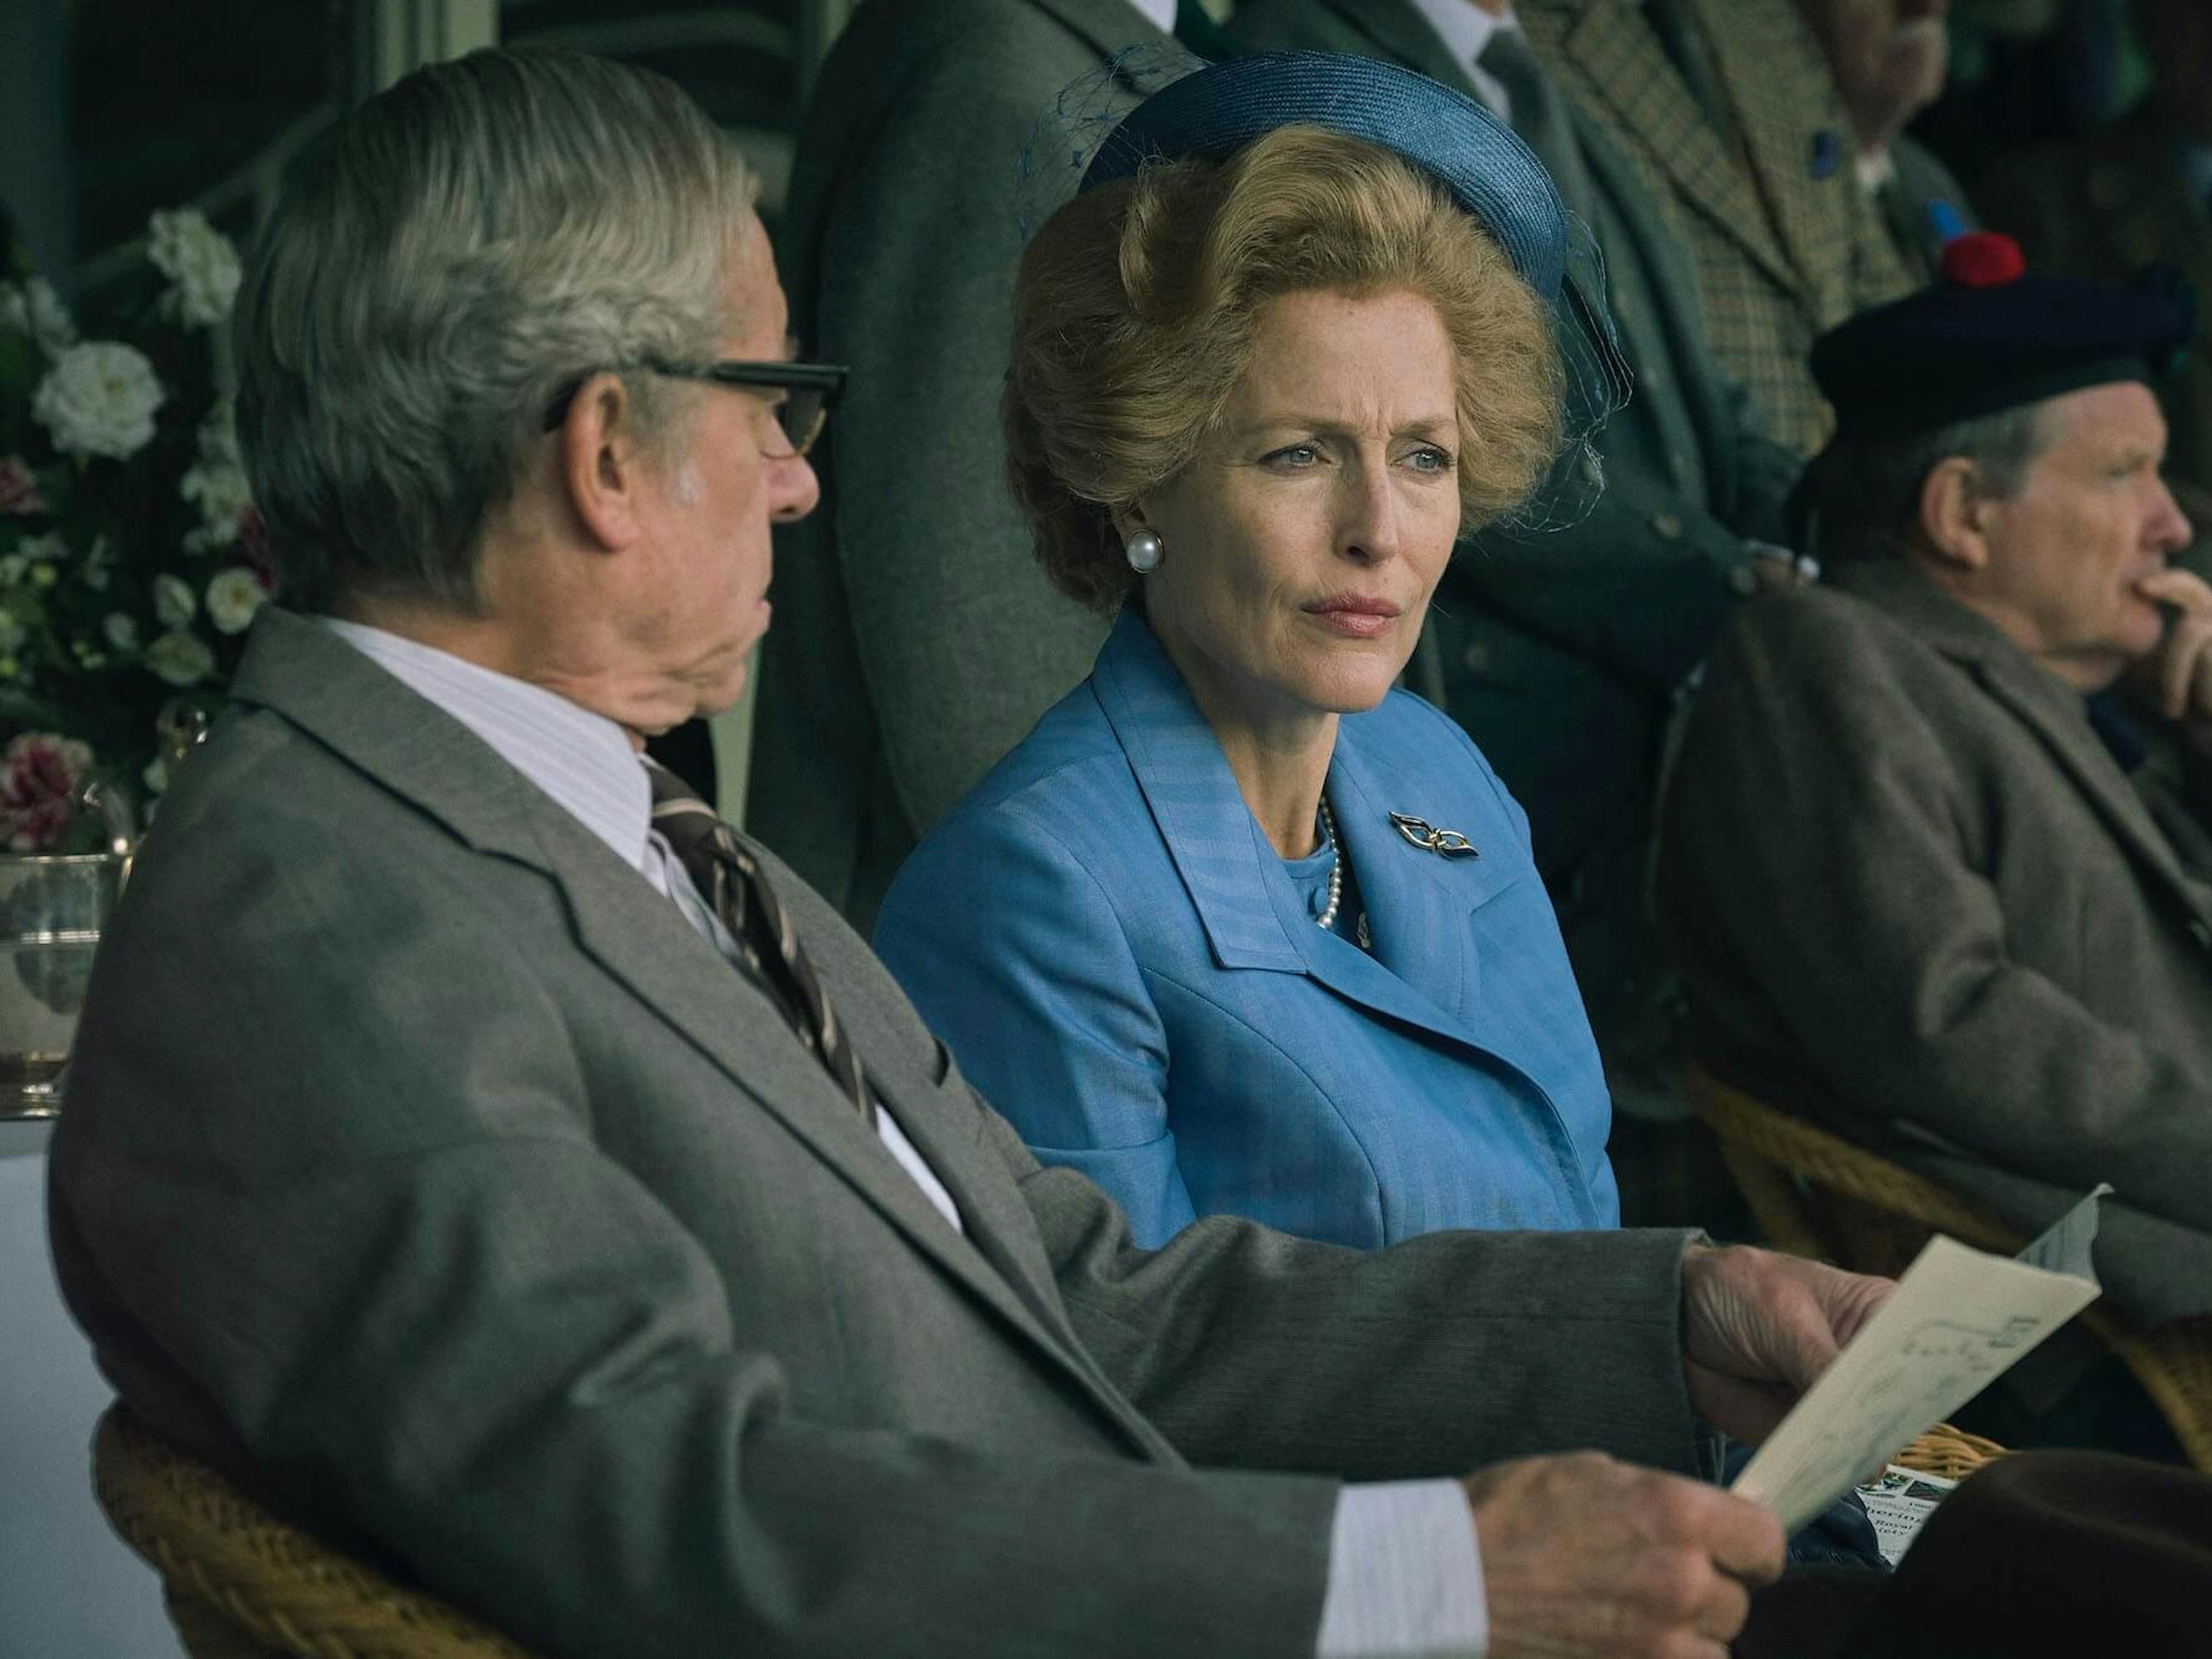 Denis Thatcher (Stephen Boxer) and Margaret Thatcher (Gillian Anderson) sit together. Denis wears a grey suit, and Margaret wears a blue suit and matching hat.